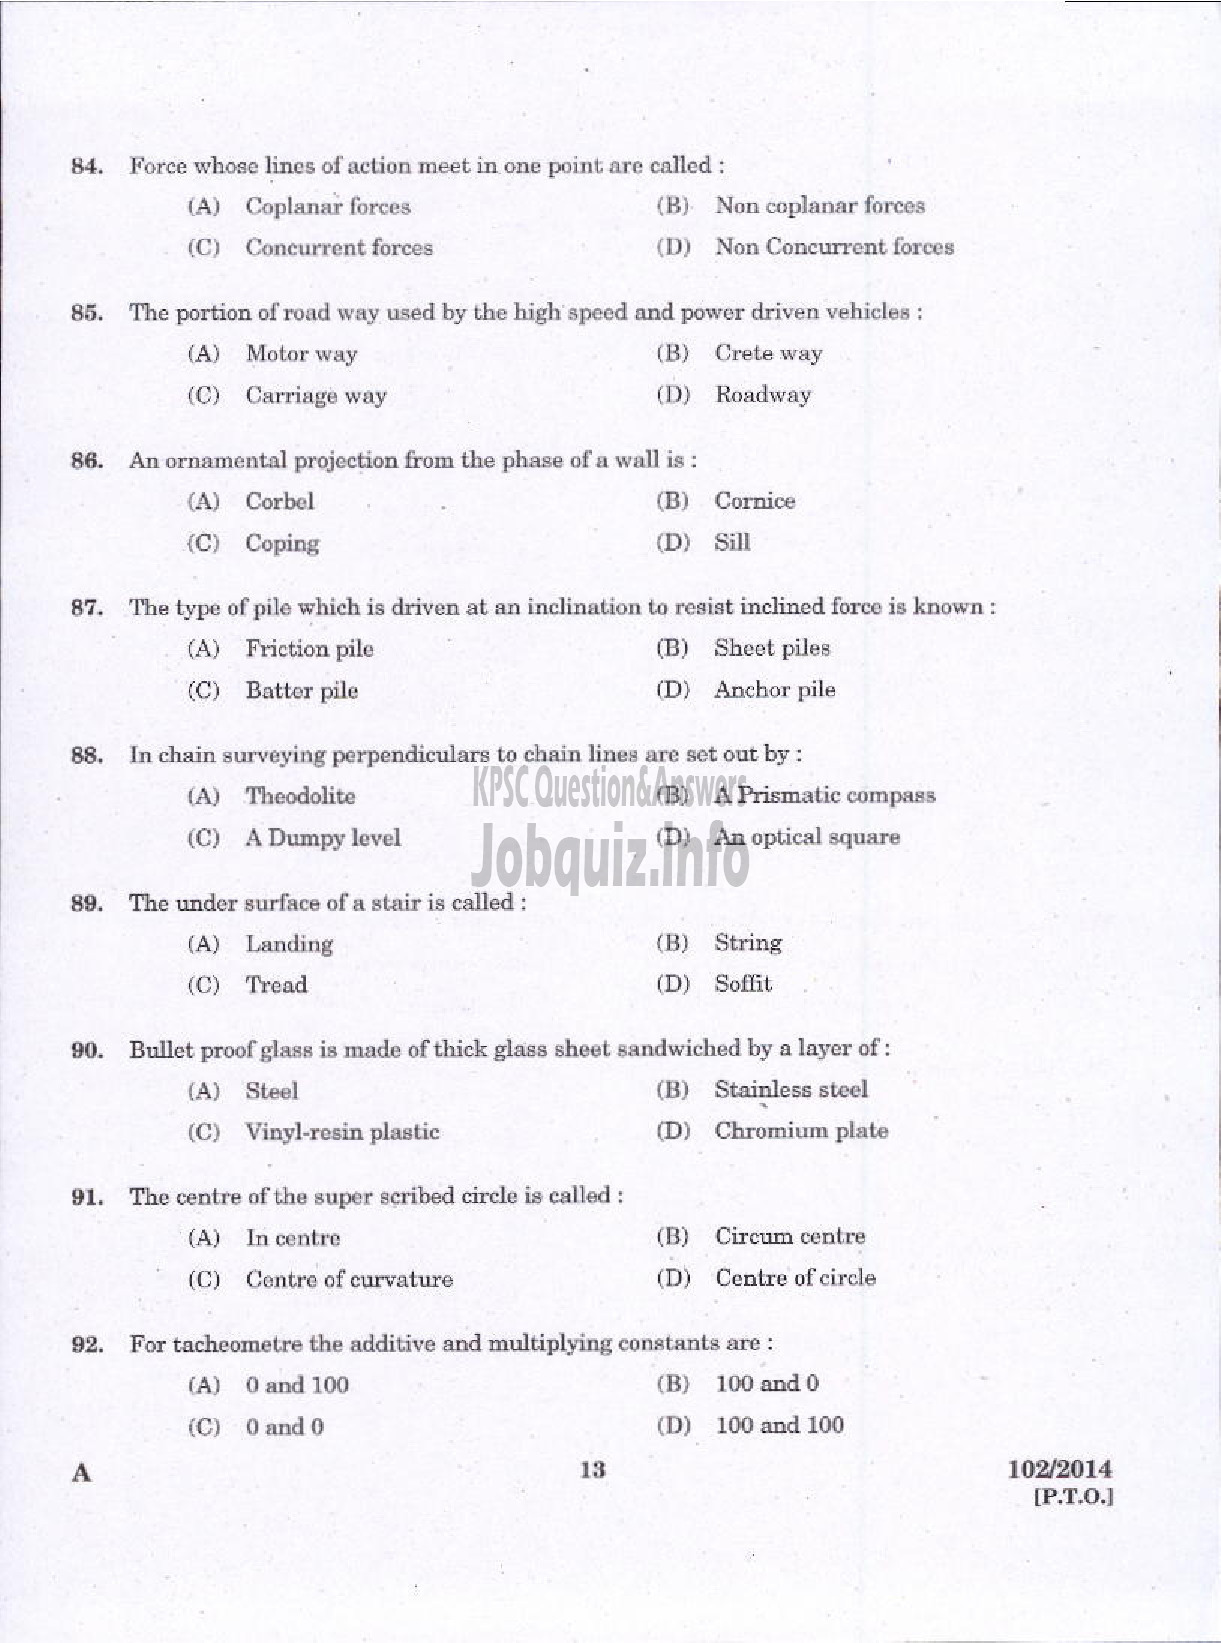 Kerala PSC Question Paper - III GRADE OVERSEER CIVIL SR FOR SC ST IRRIGATION AND II GRADE OVERSEER TRACER PUBLIC WORKS IRRIGATION-11